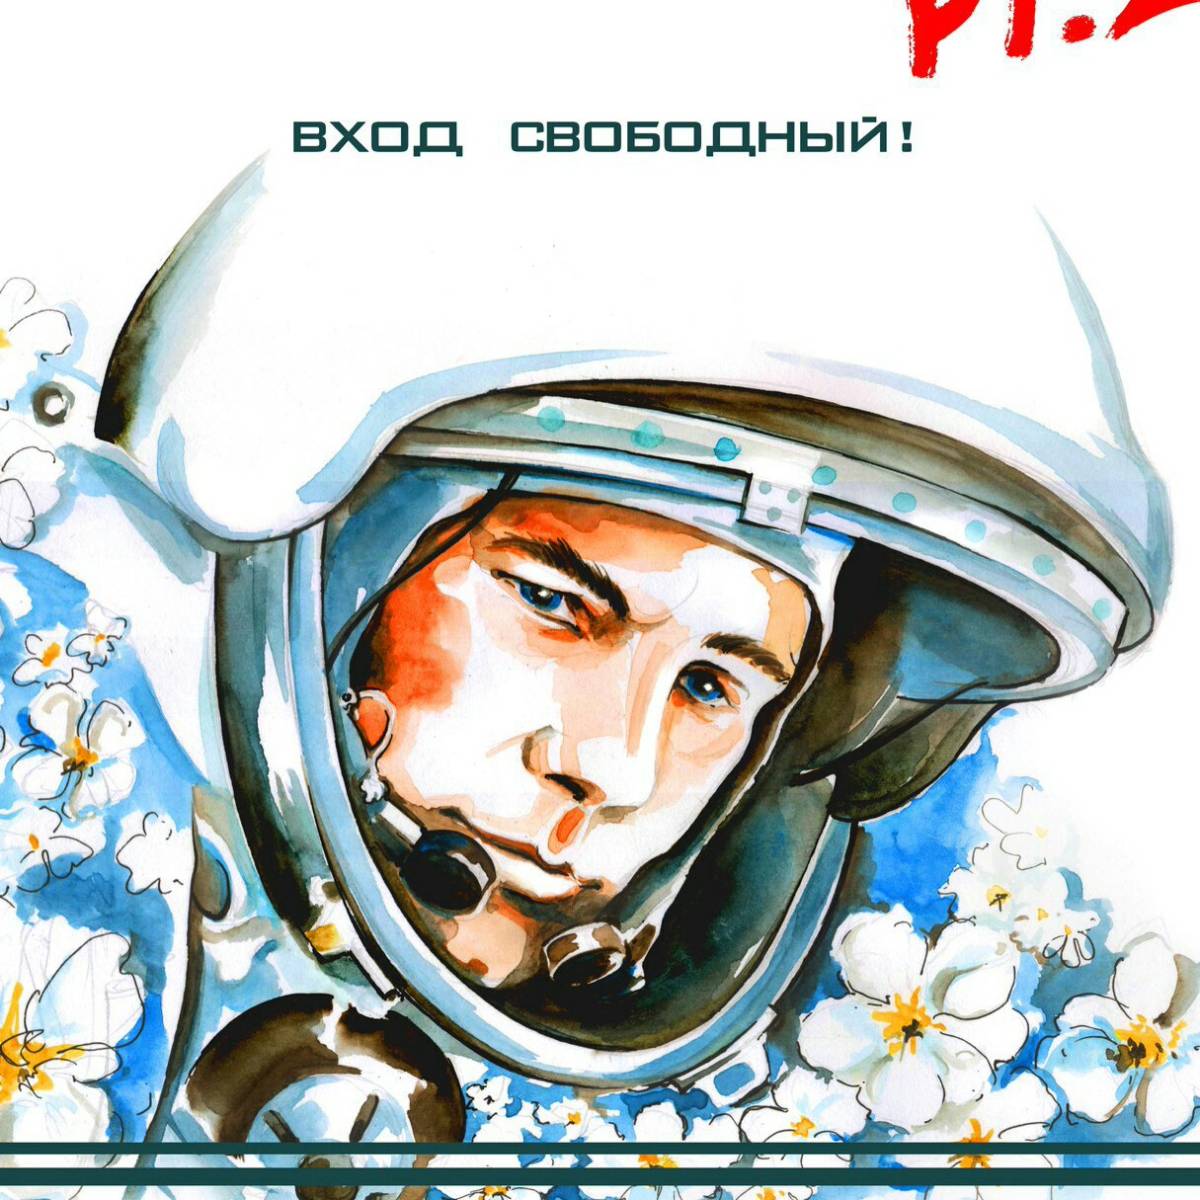 Гагарин космонавт. Звездный сын земли Гагарин.